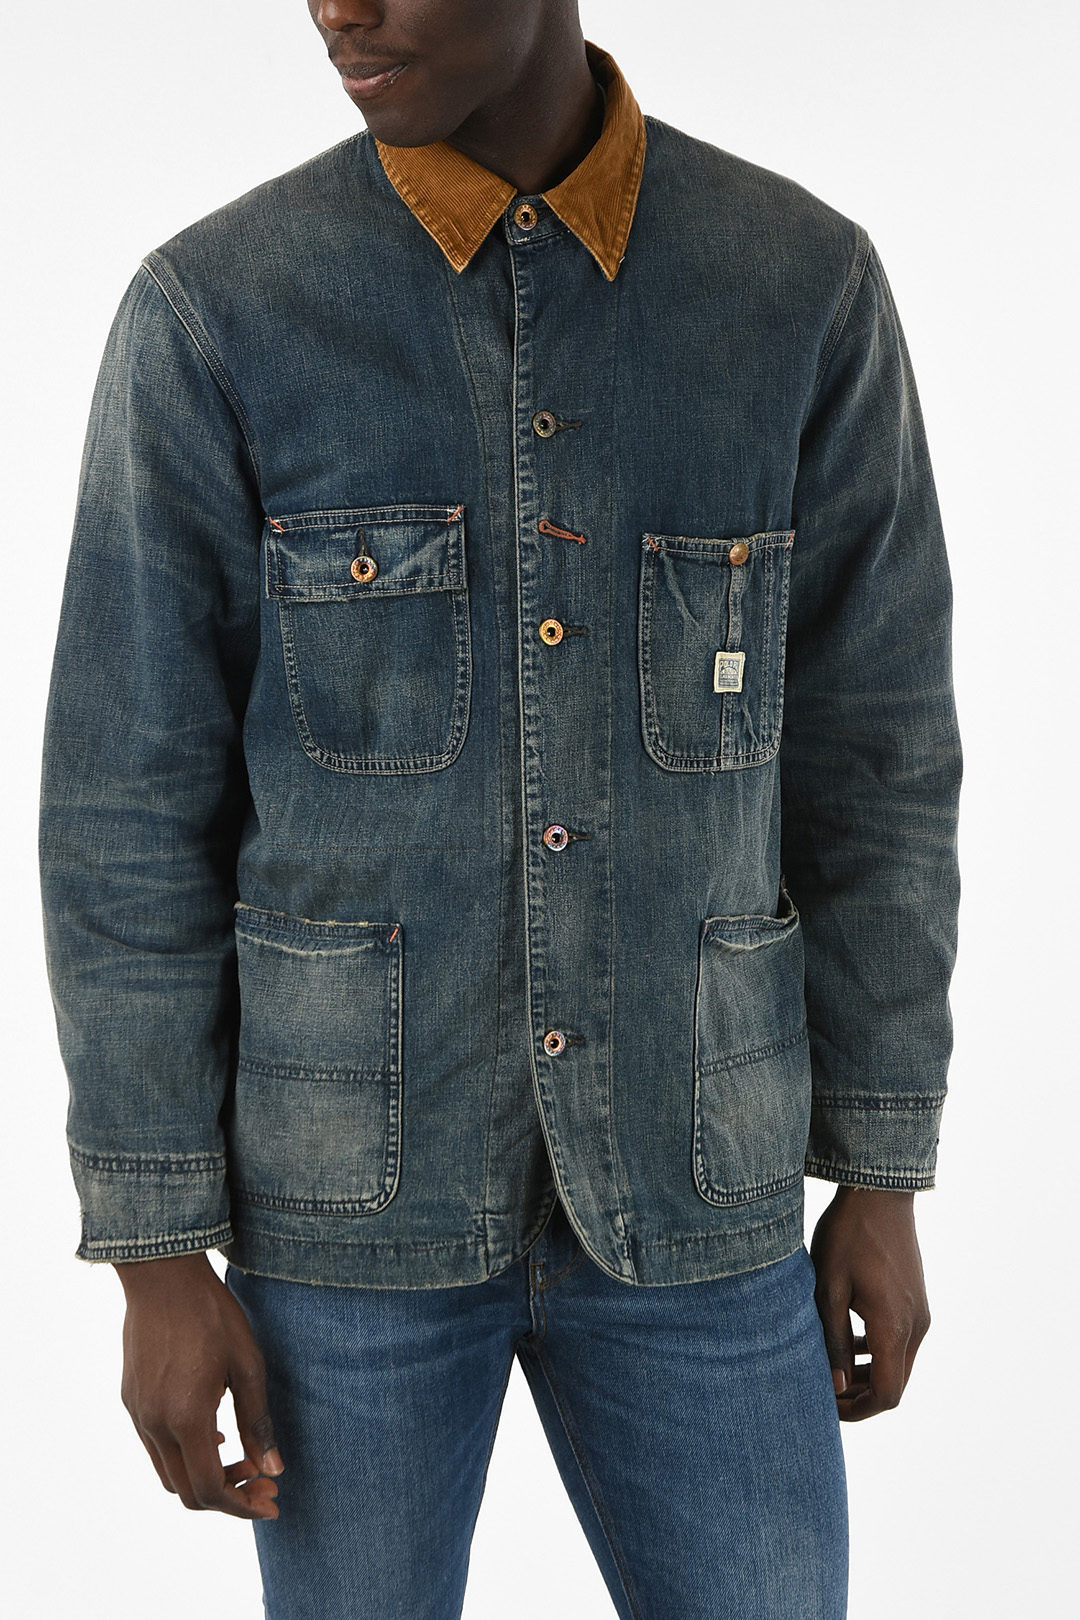 Ralph Lauren POLO Denim Jacket with inner Pocket men - Glamood Outlet